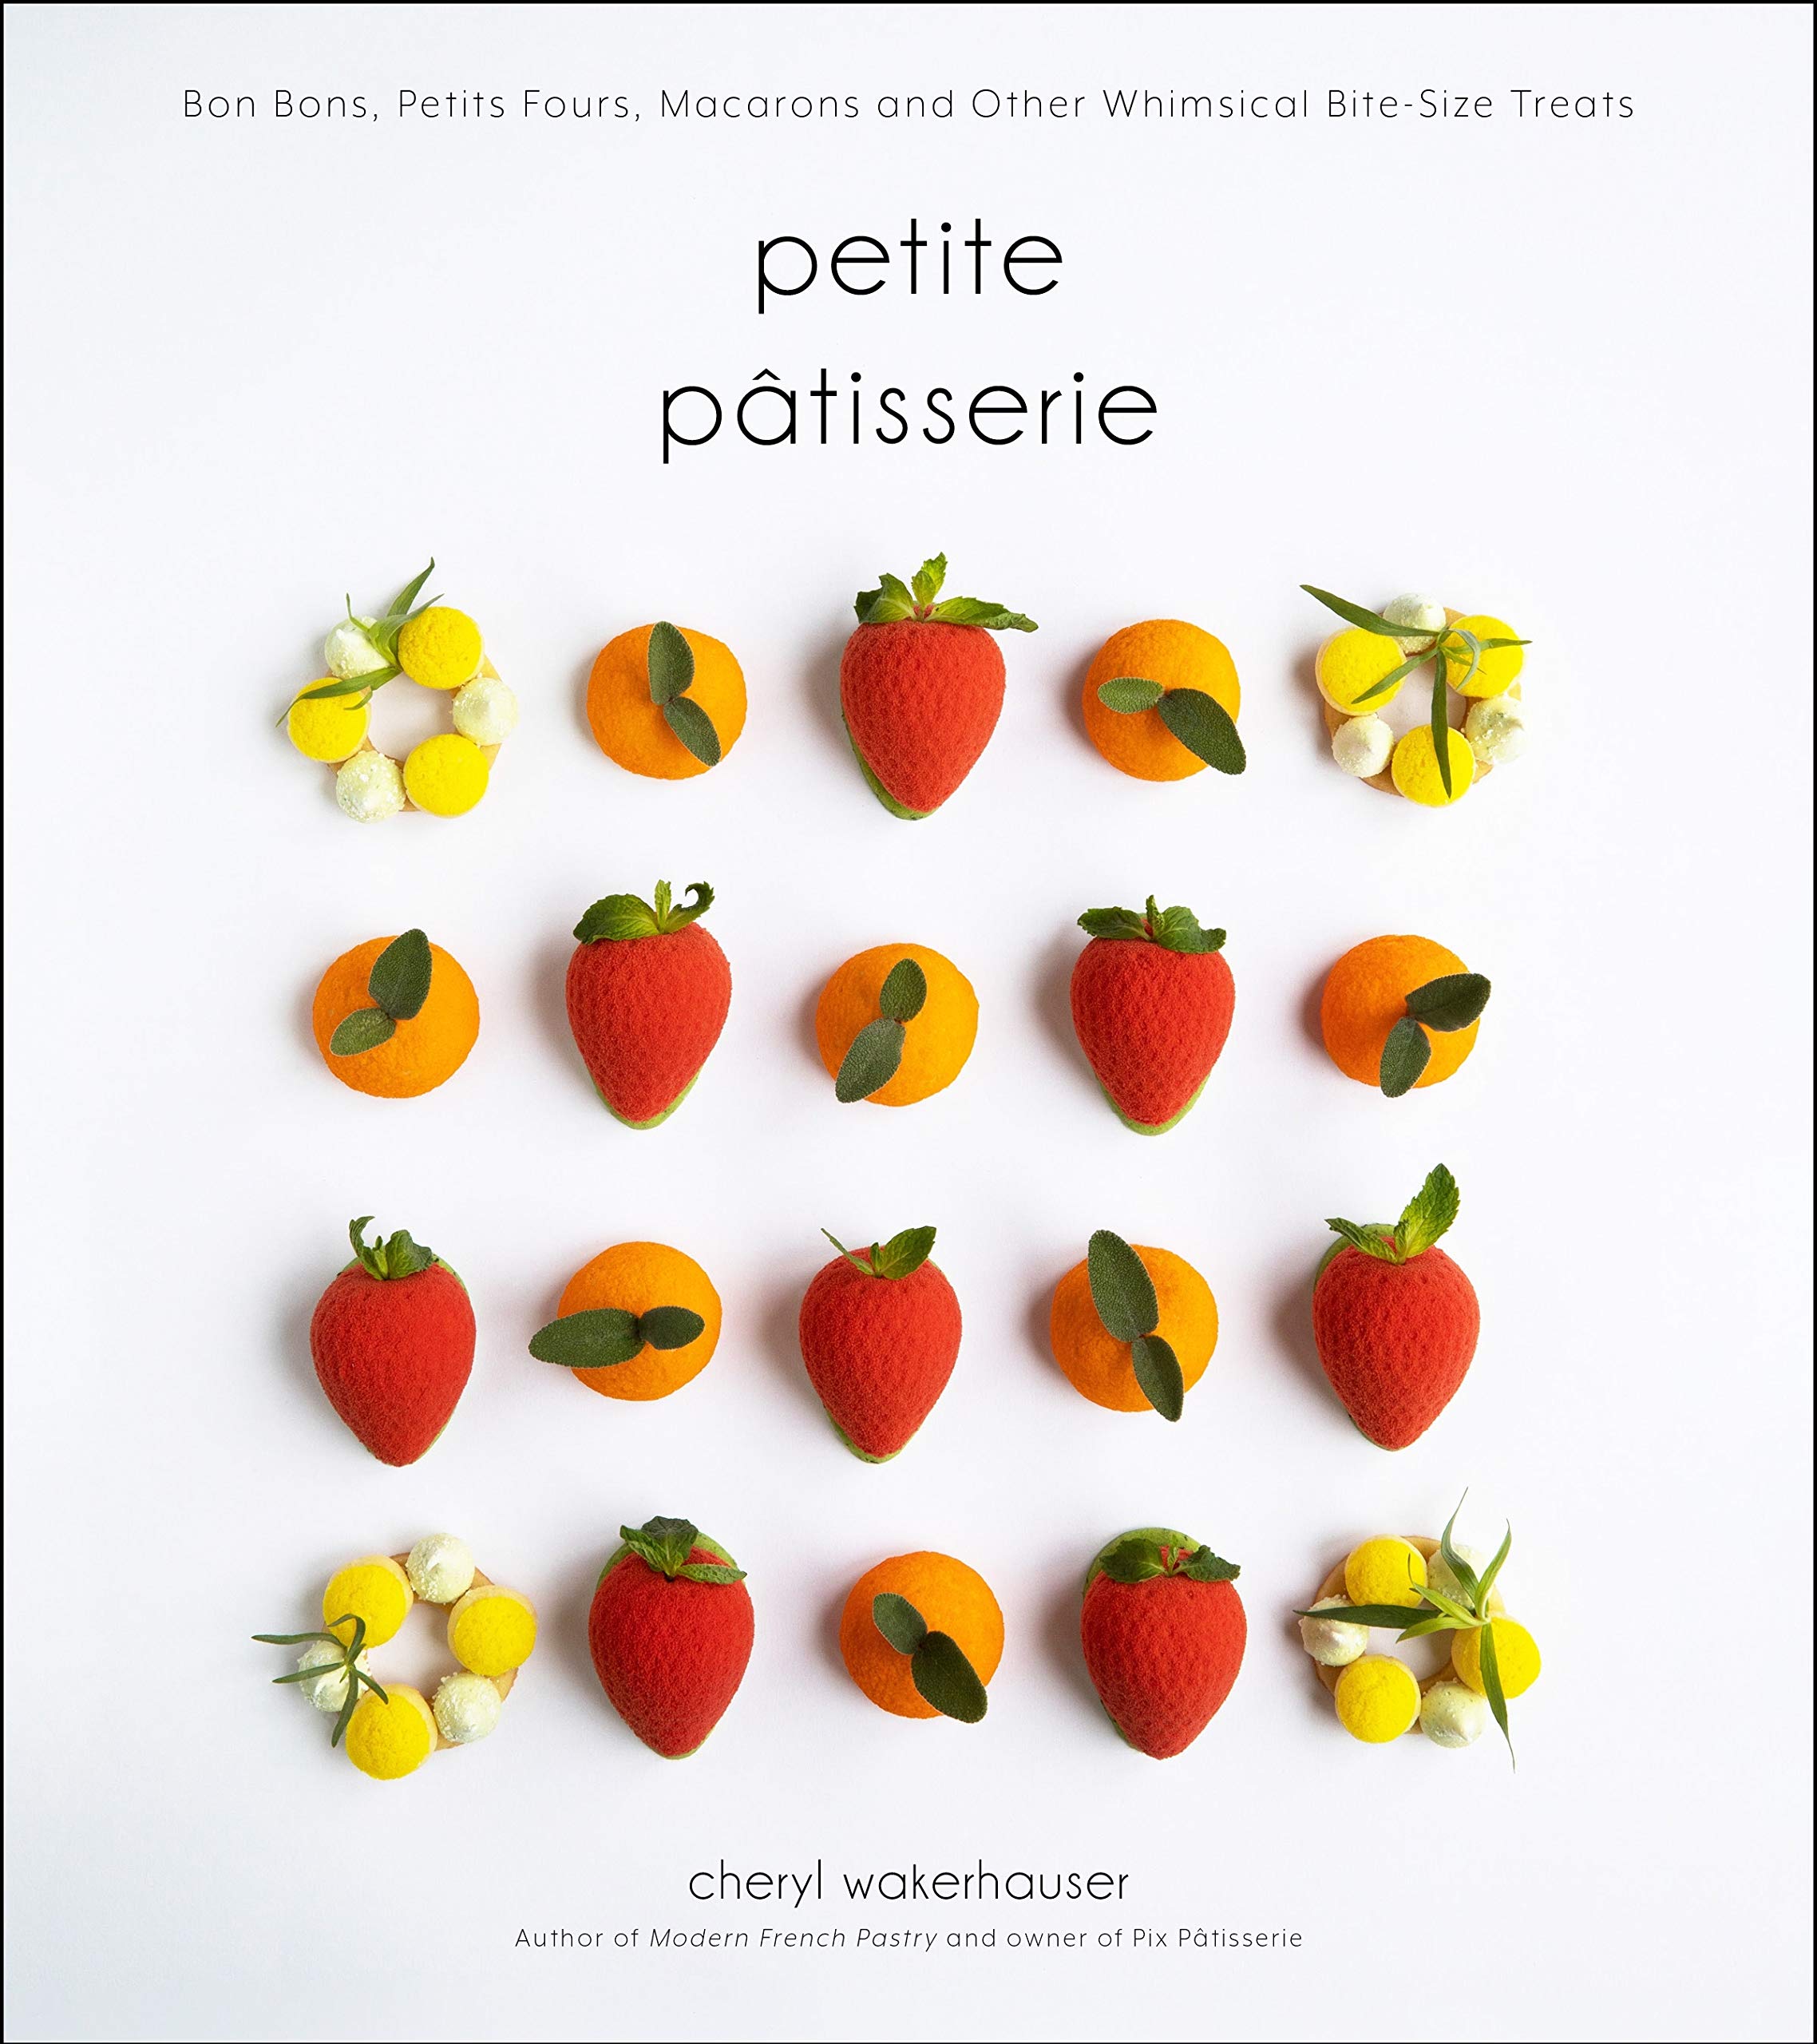 Petite Pâtisserie: Bon Bons, Petits Fours, Macarons and Other Whimsical Bite-Size Treats (Cheryl Wakerhauser)